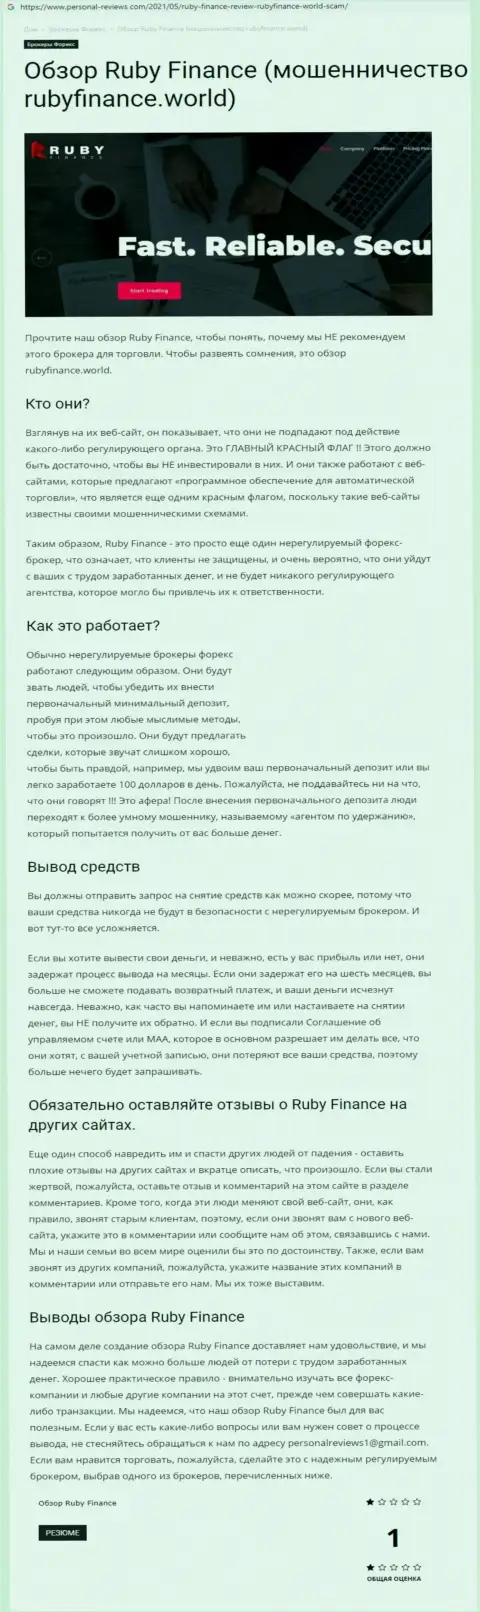 RubyFinance - АФЕРИСТЫ !!! Принципы работы ЛОХОТРОНА (обзор)